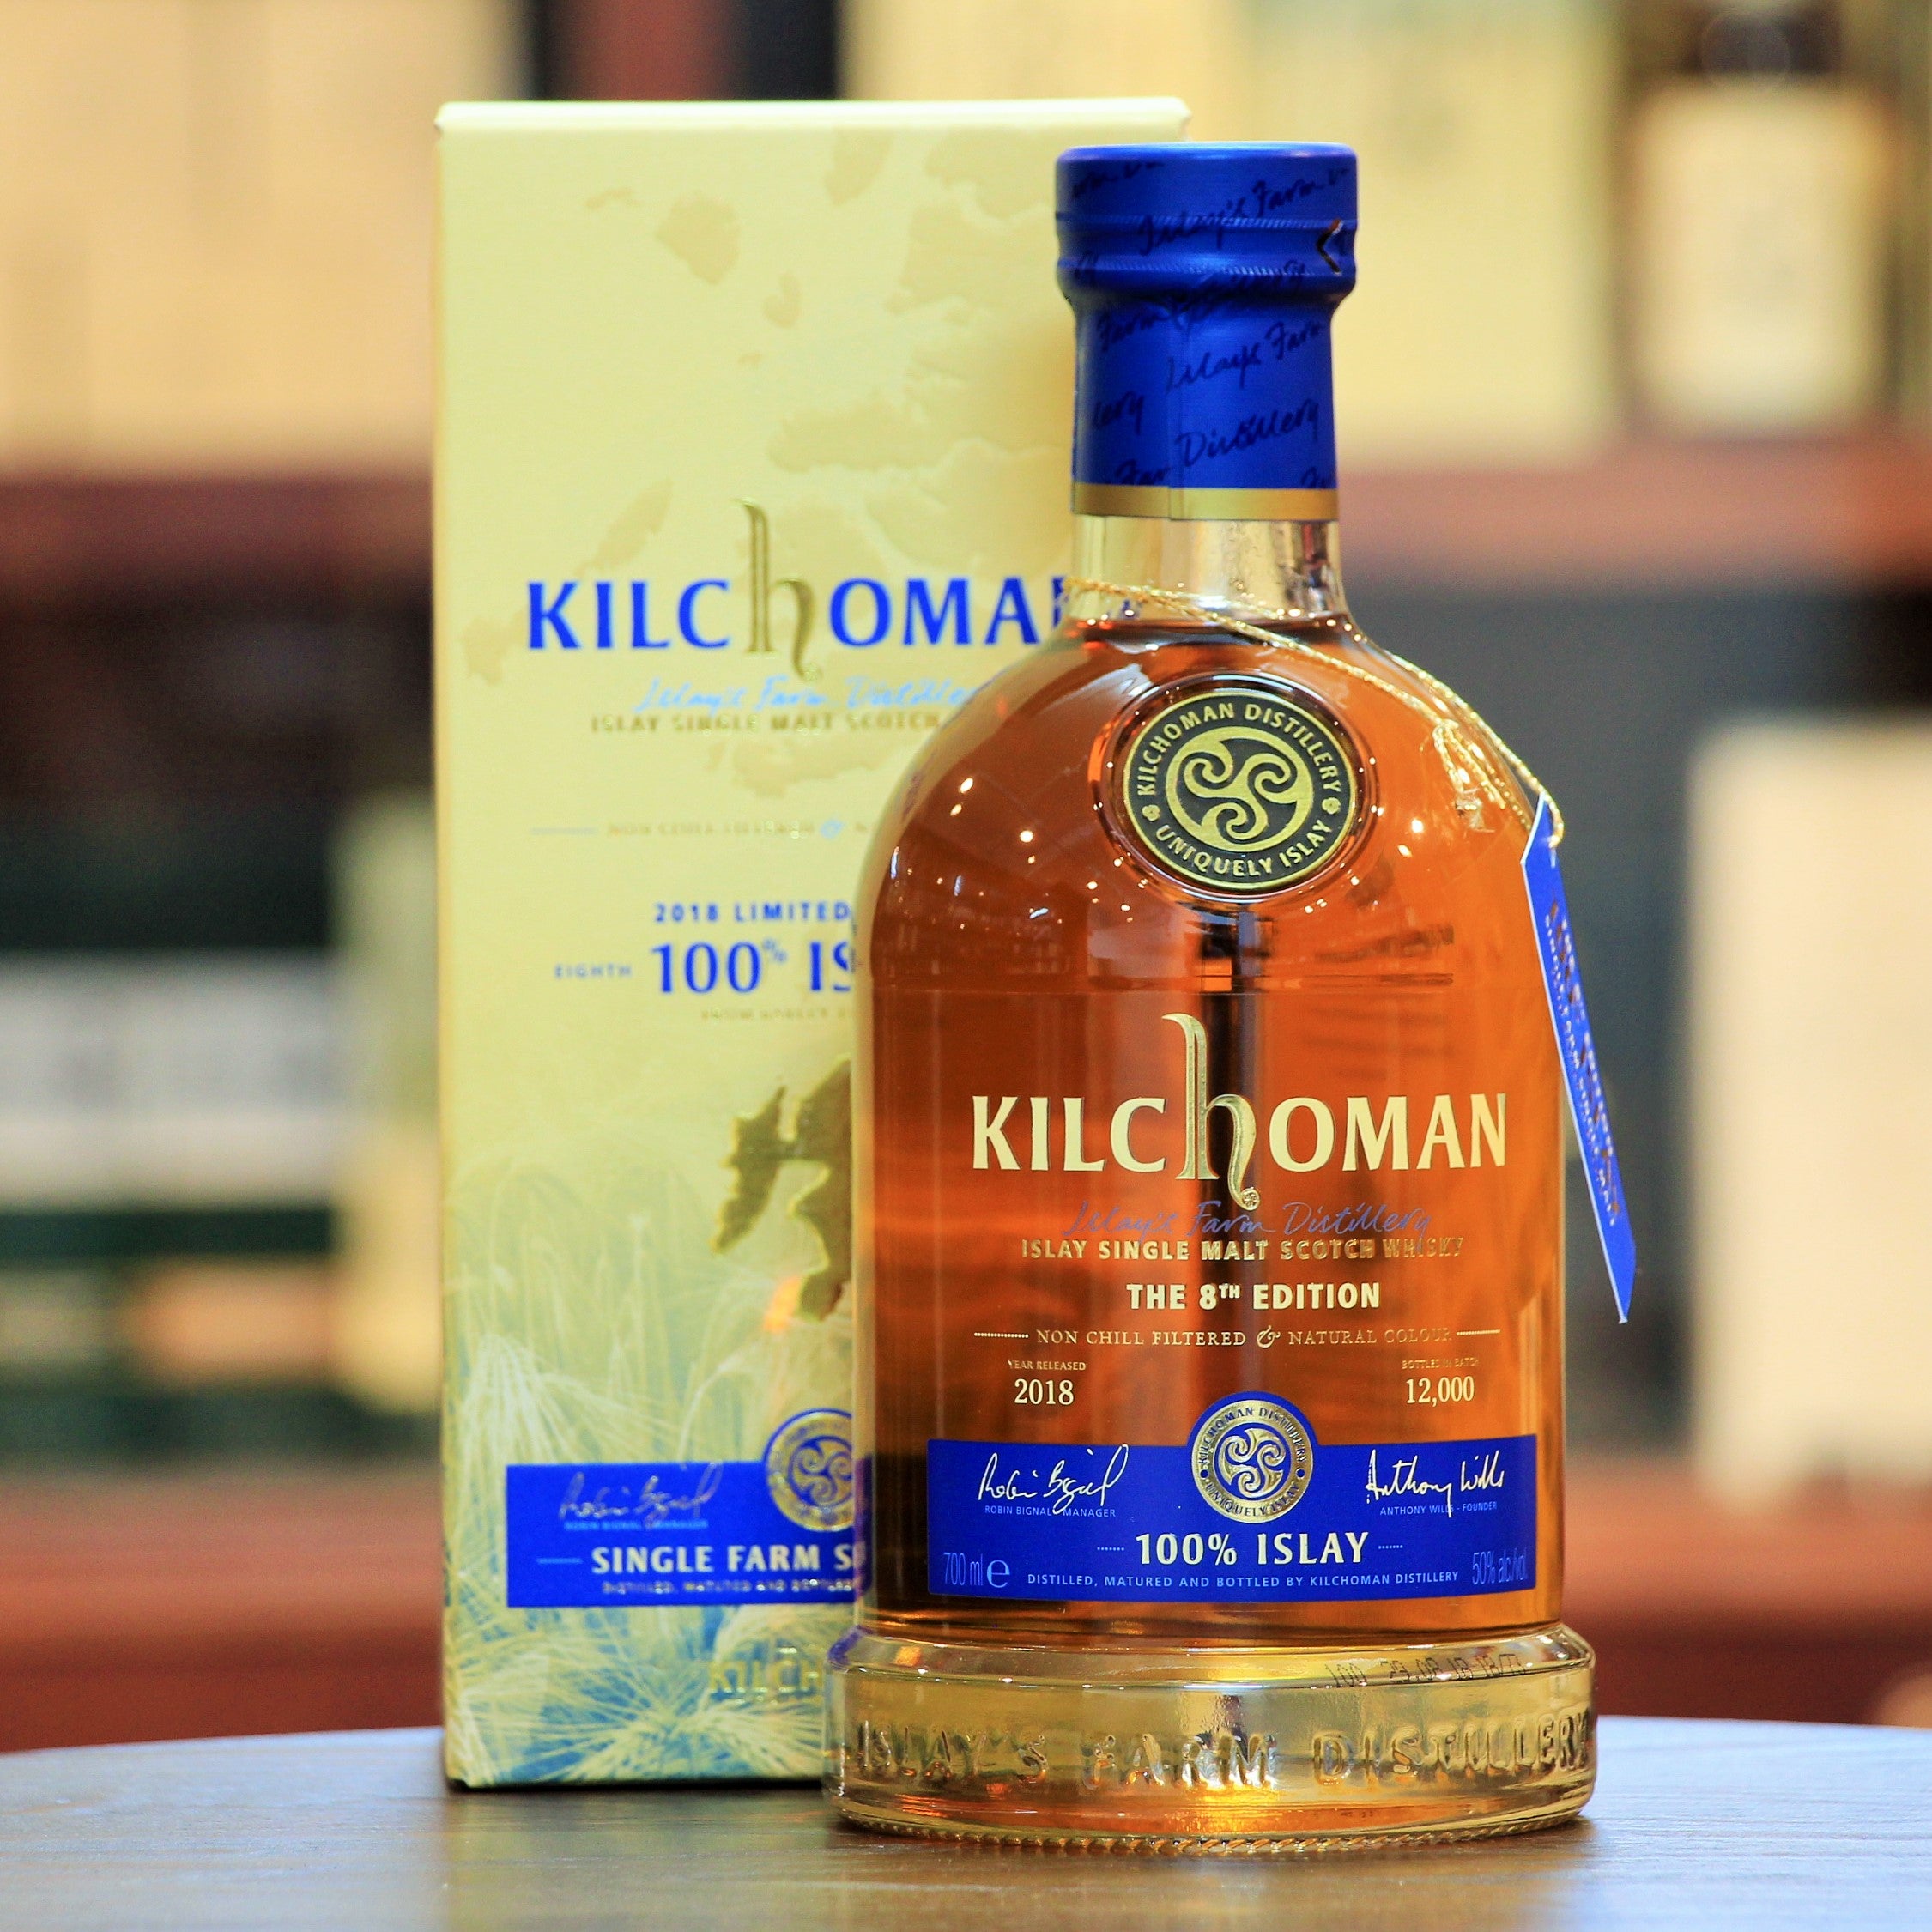 Kilchoman 100% Islay 8th Edition (2018) Whisky